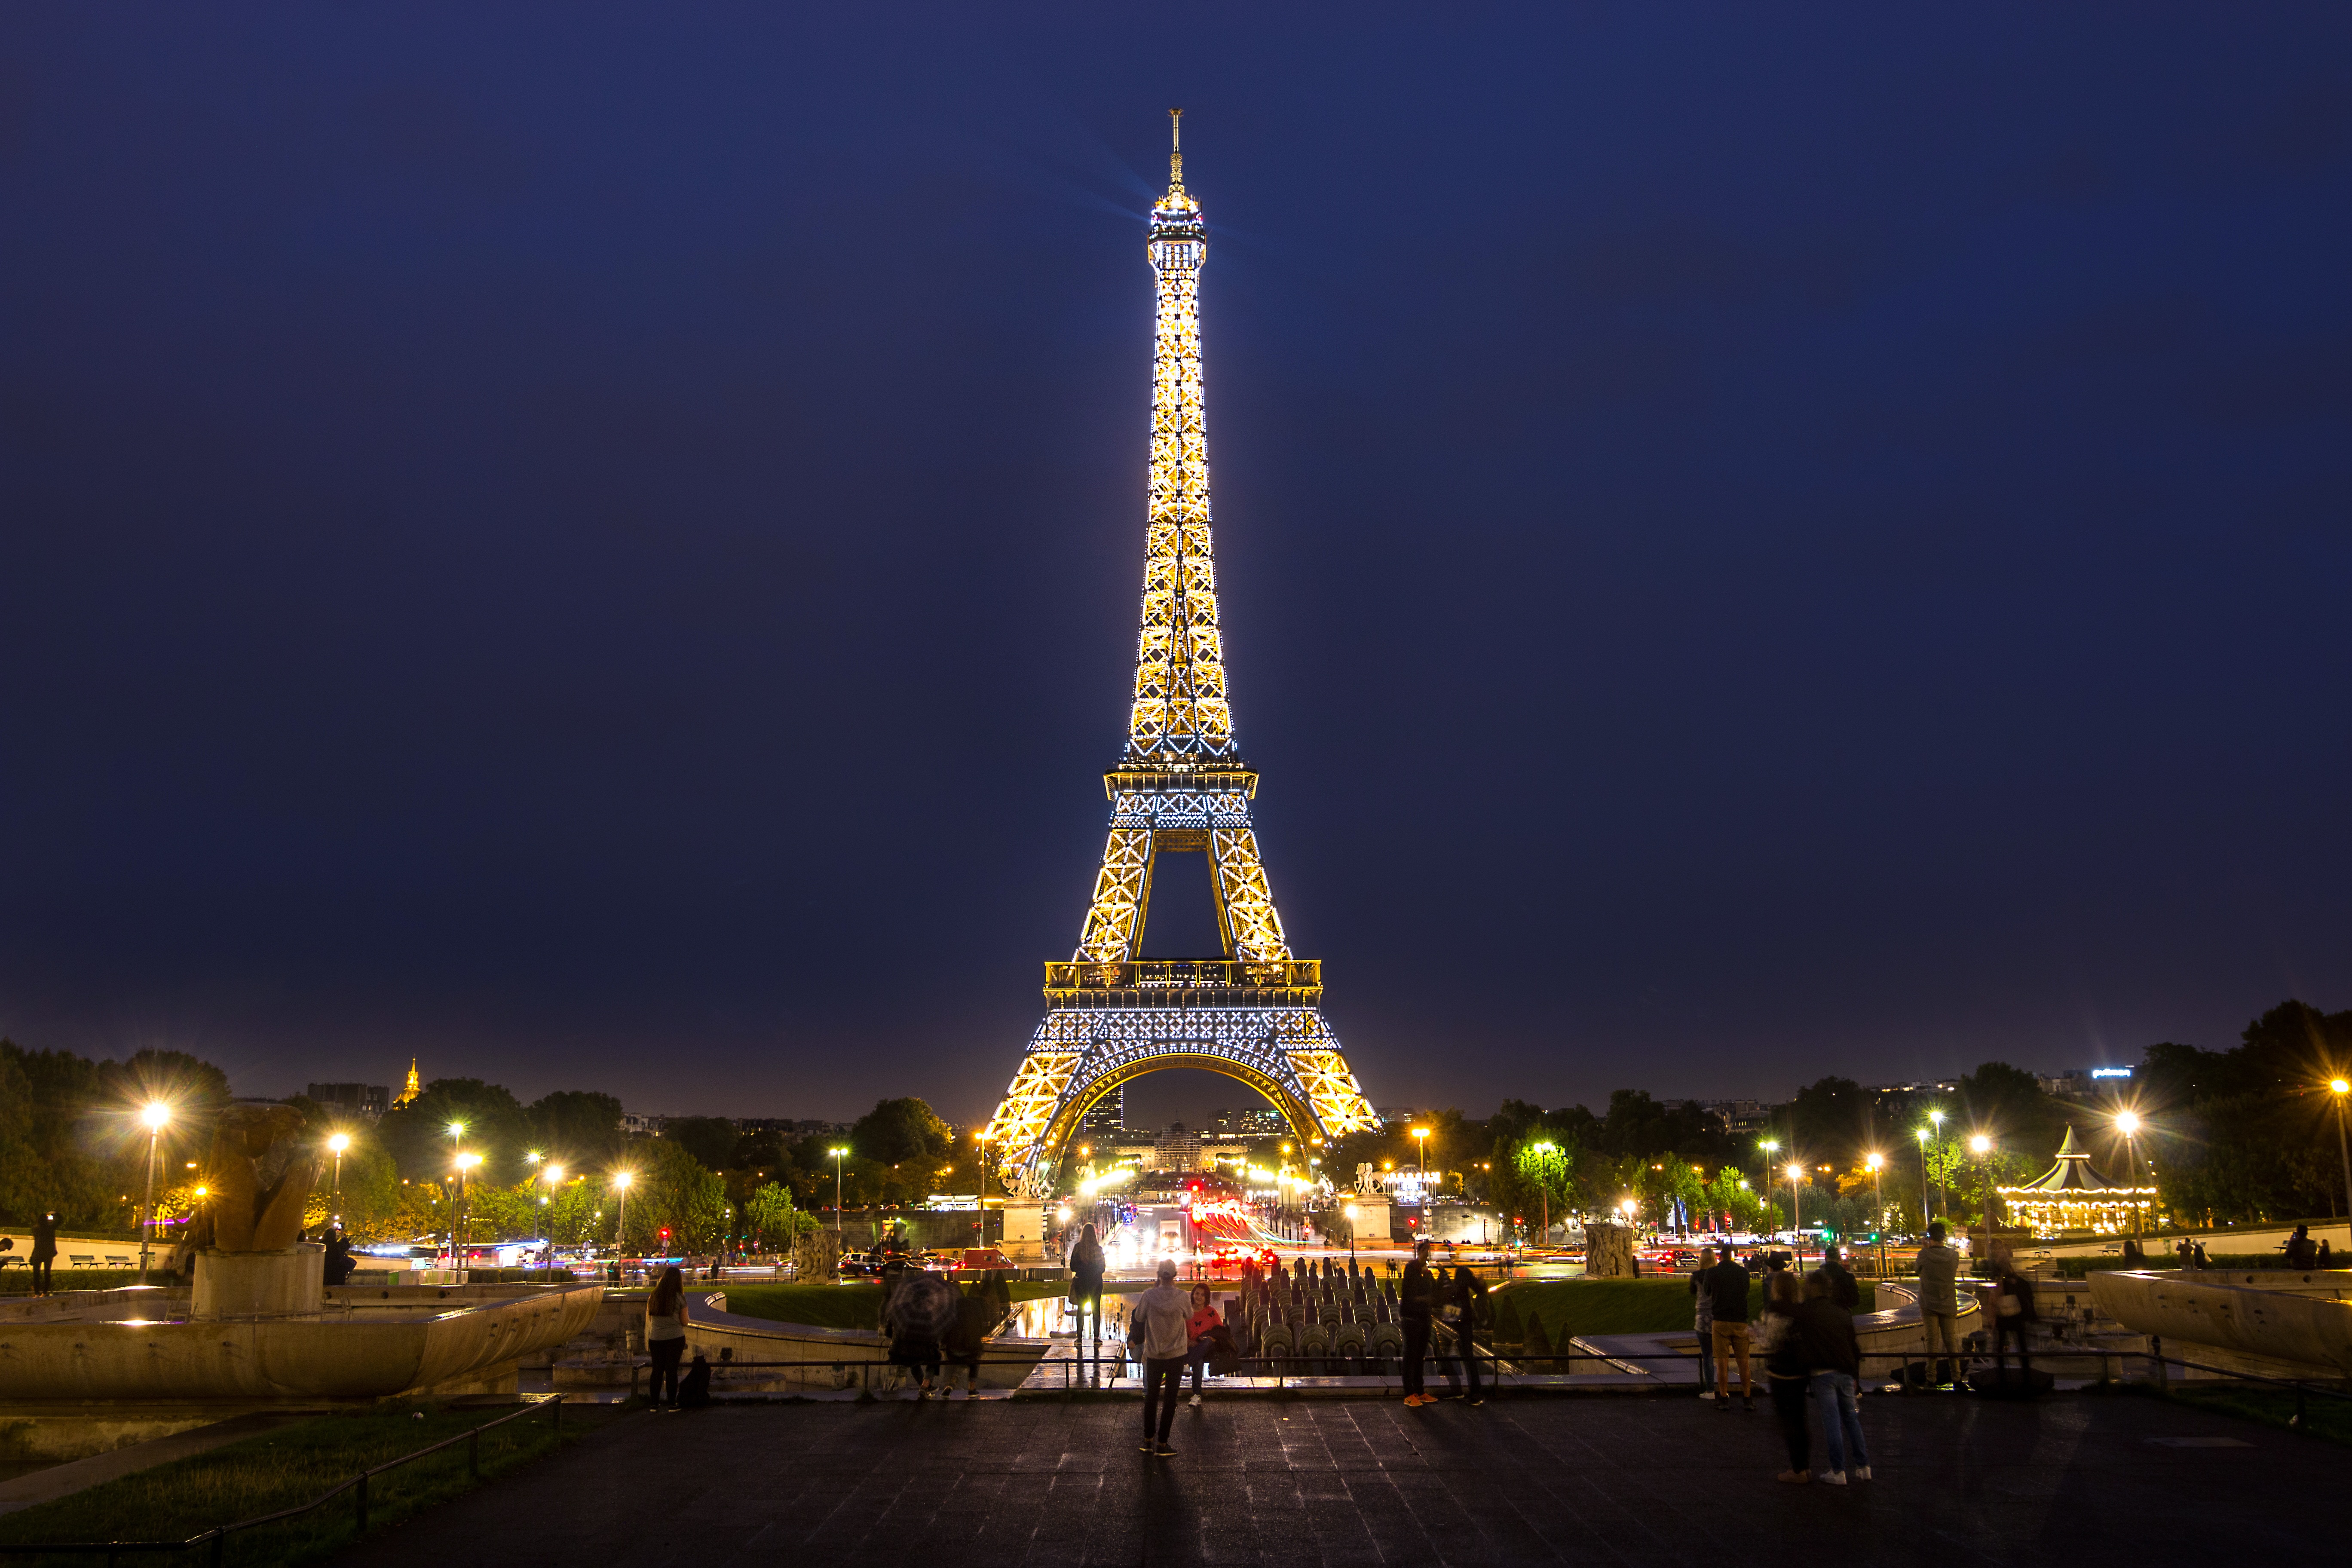 Luminous Eiffel Tower in the evening